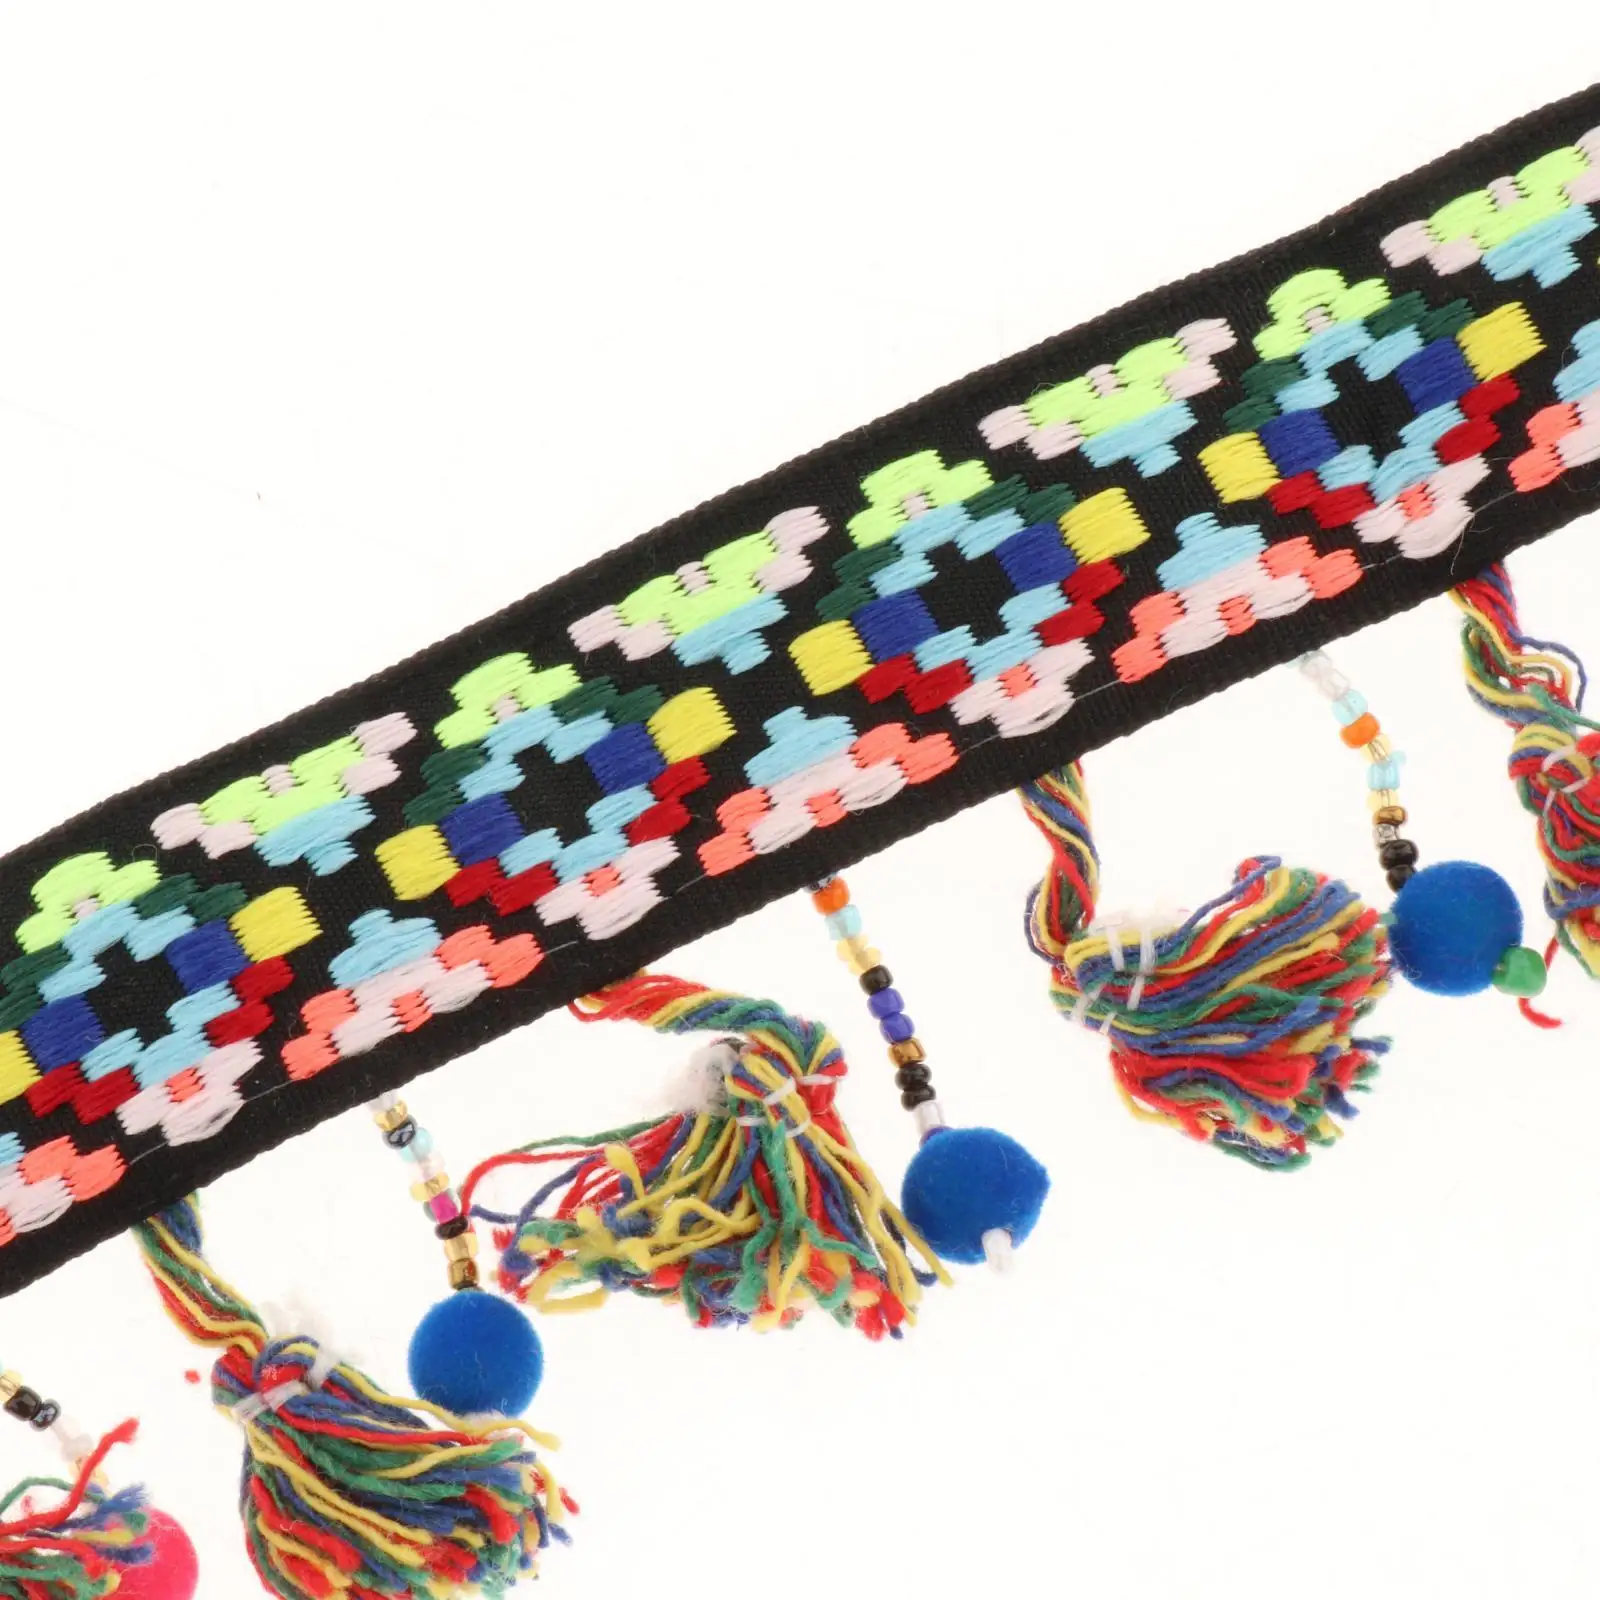 Colorful Tassel Embroidered Lace Trim 2.5cm Width Vintage Cross Stitch Trim DIY Webbing Trim for Sewing Craft DIY Clothes Belts